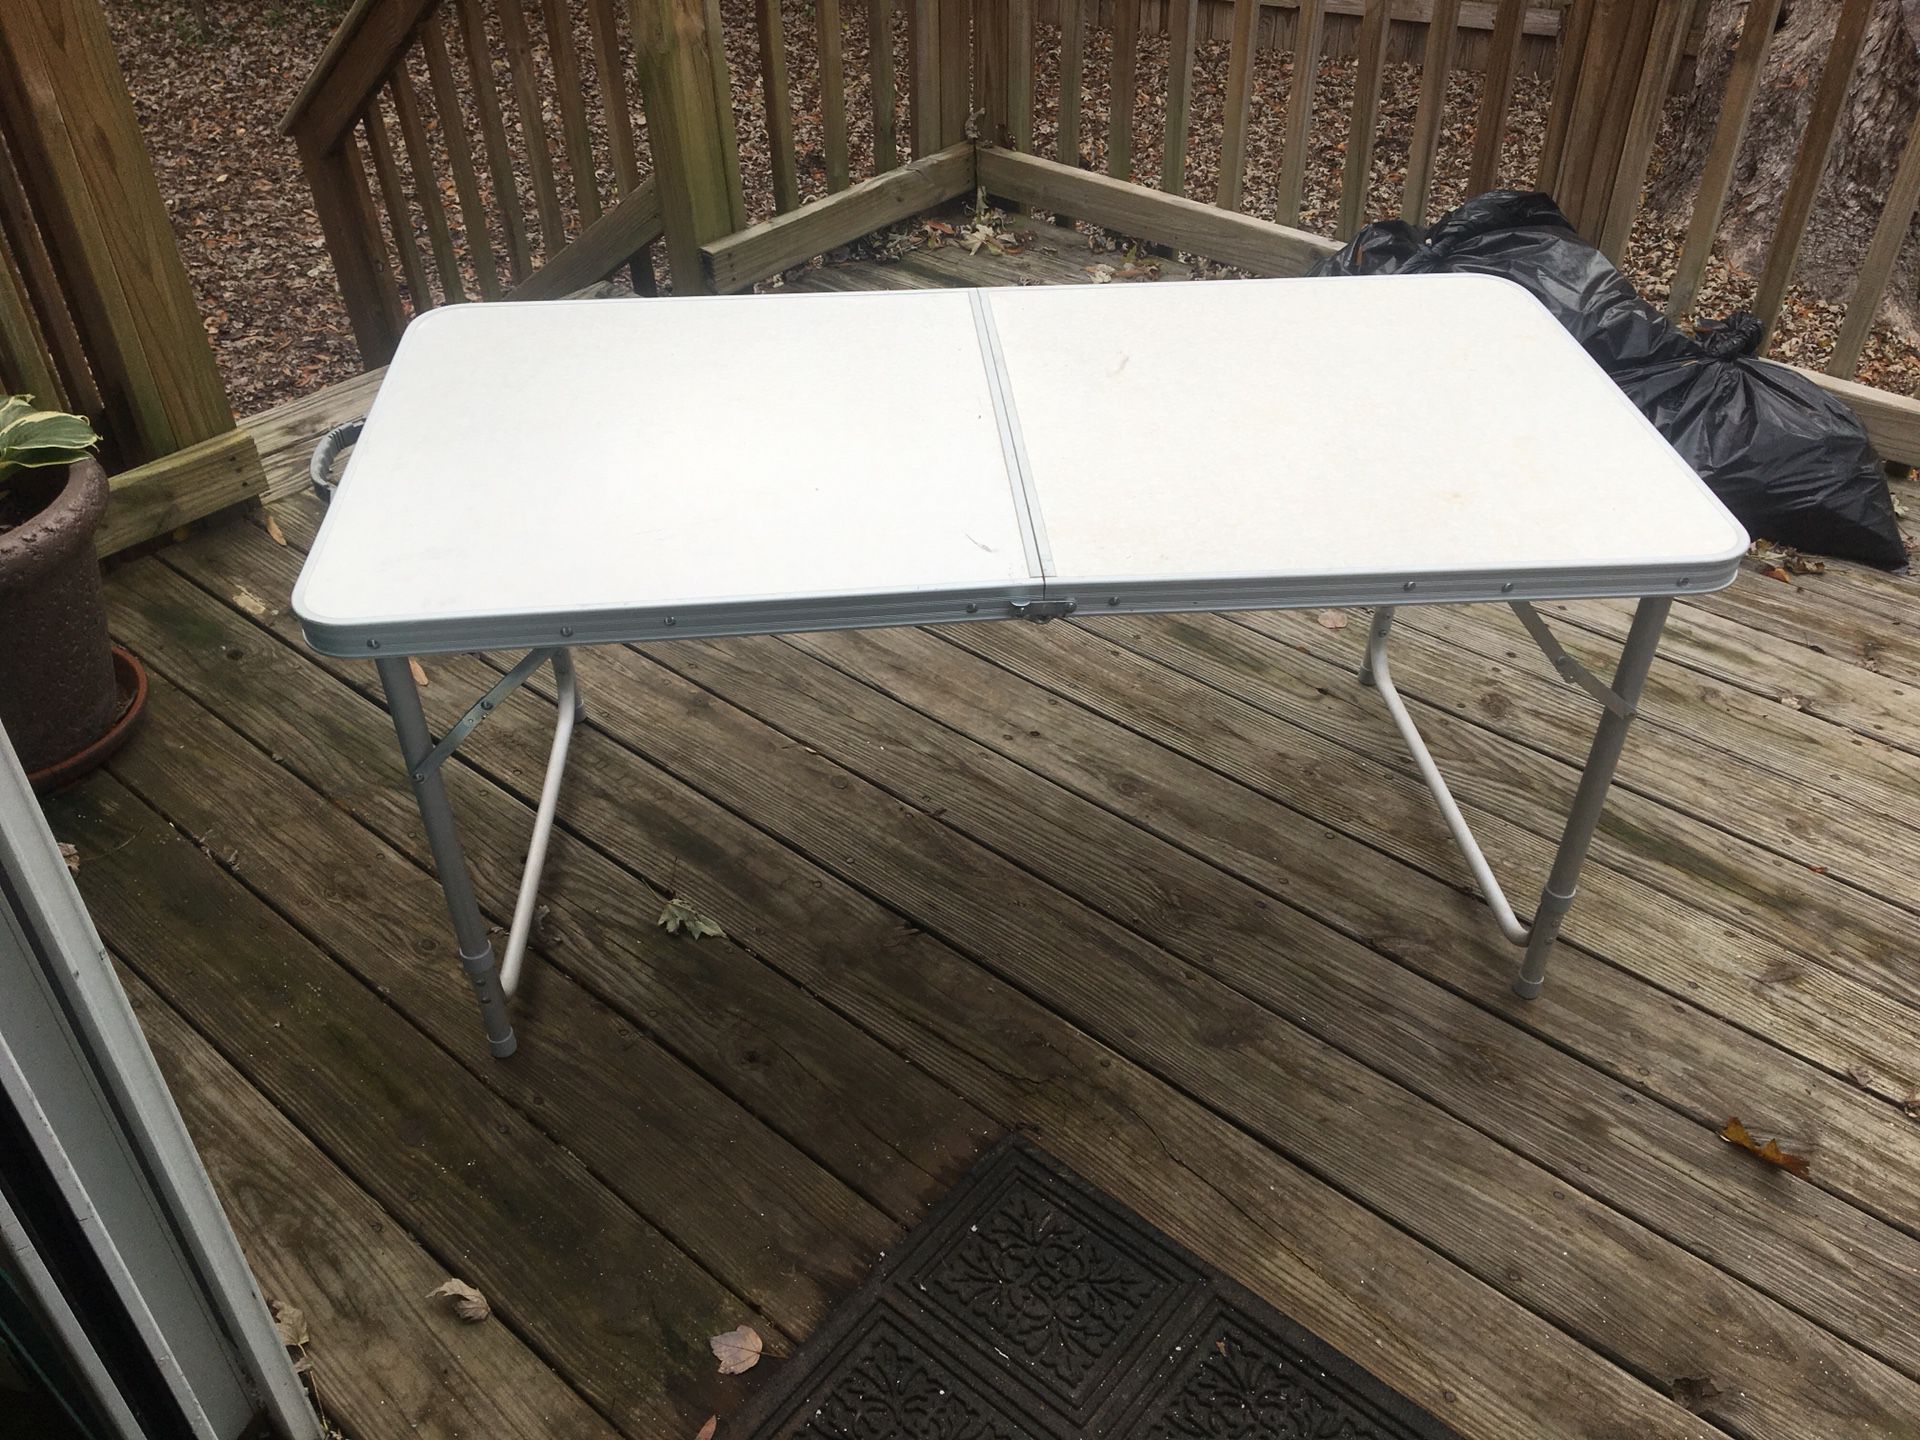 Folding camp table